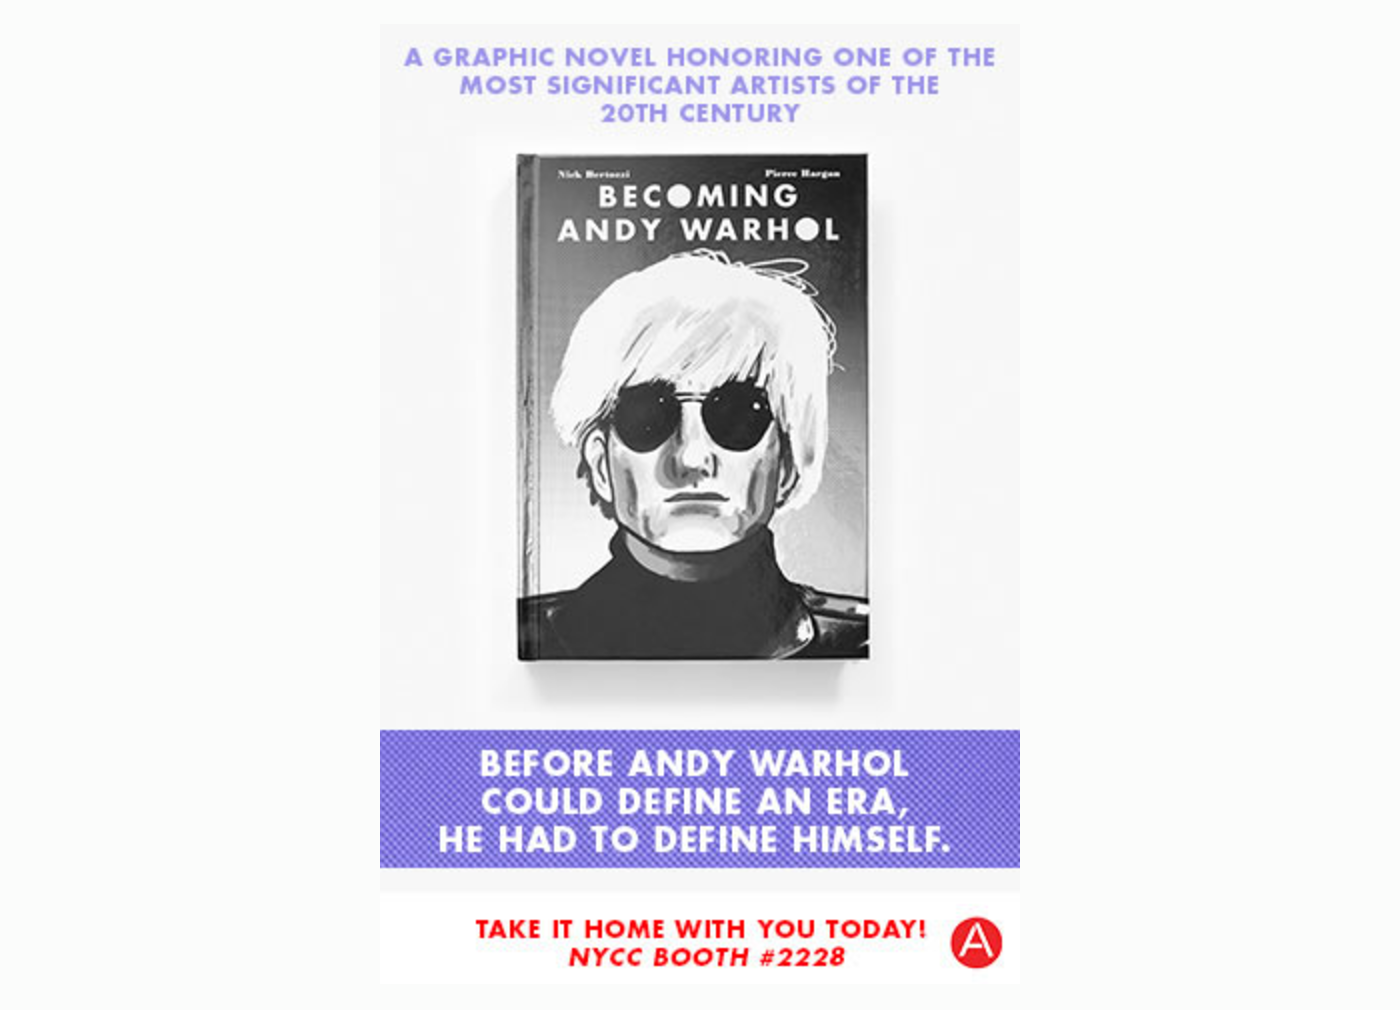 ABRAMS Becoming Andy Warhol Comic Con Proximity Targeting Ad Creative